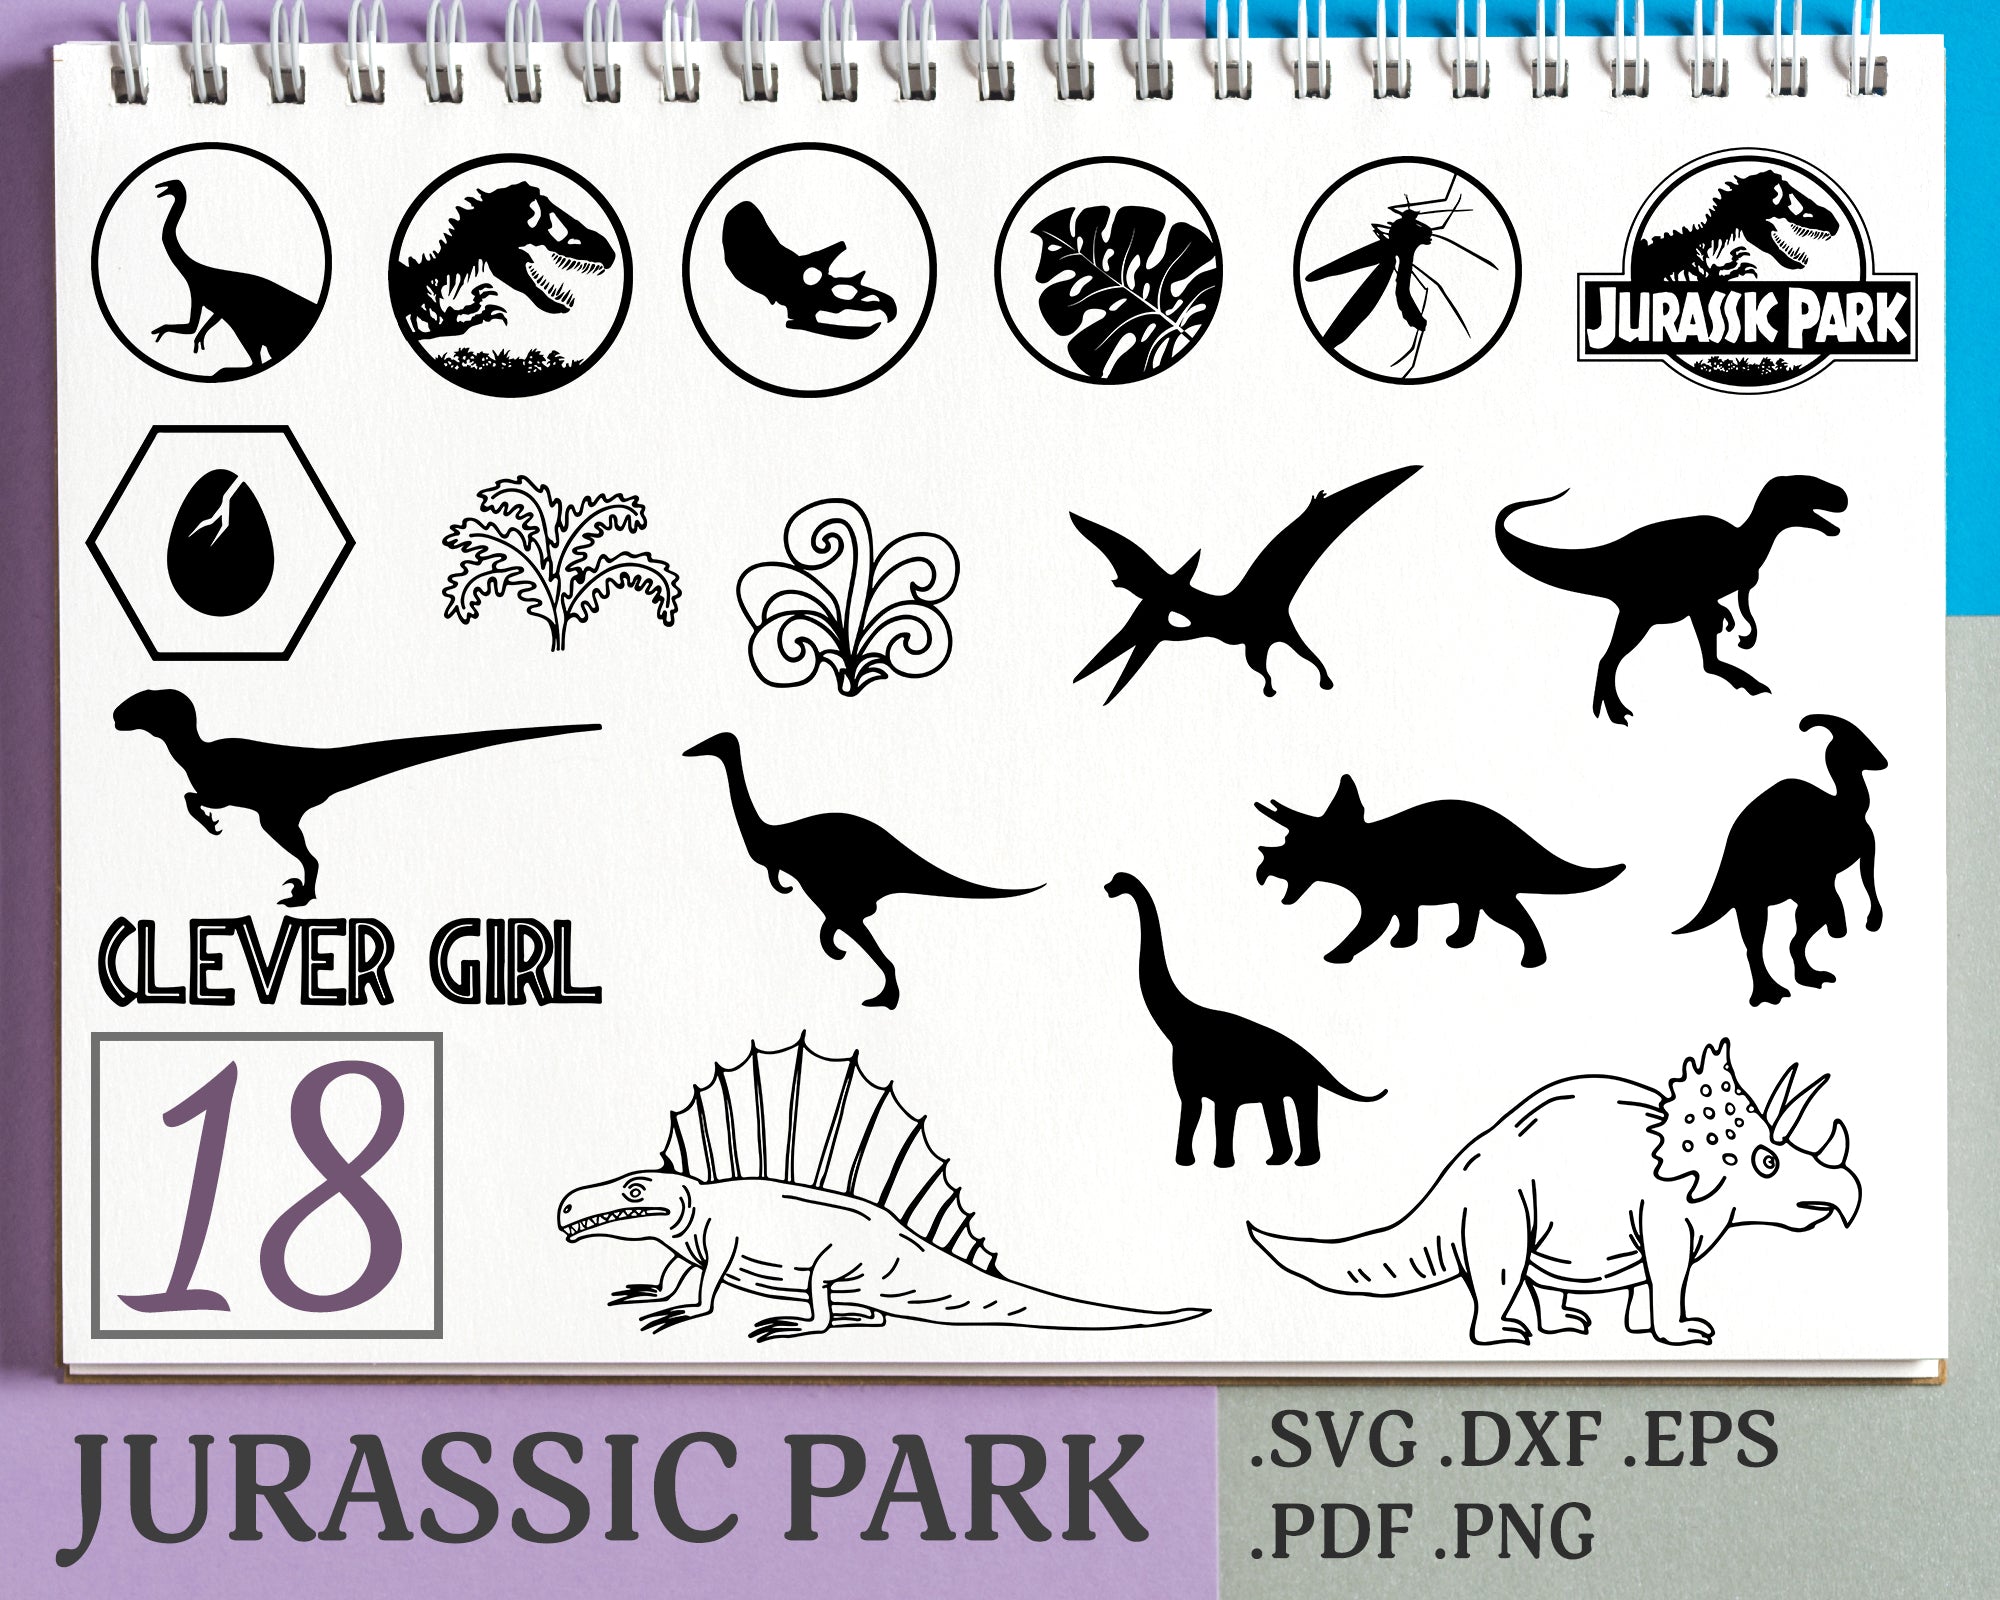 Download Jurassic Park Svg Nature Jurrasic Park Jurrasic Park Alphabet Ju Clipartic